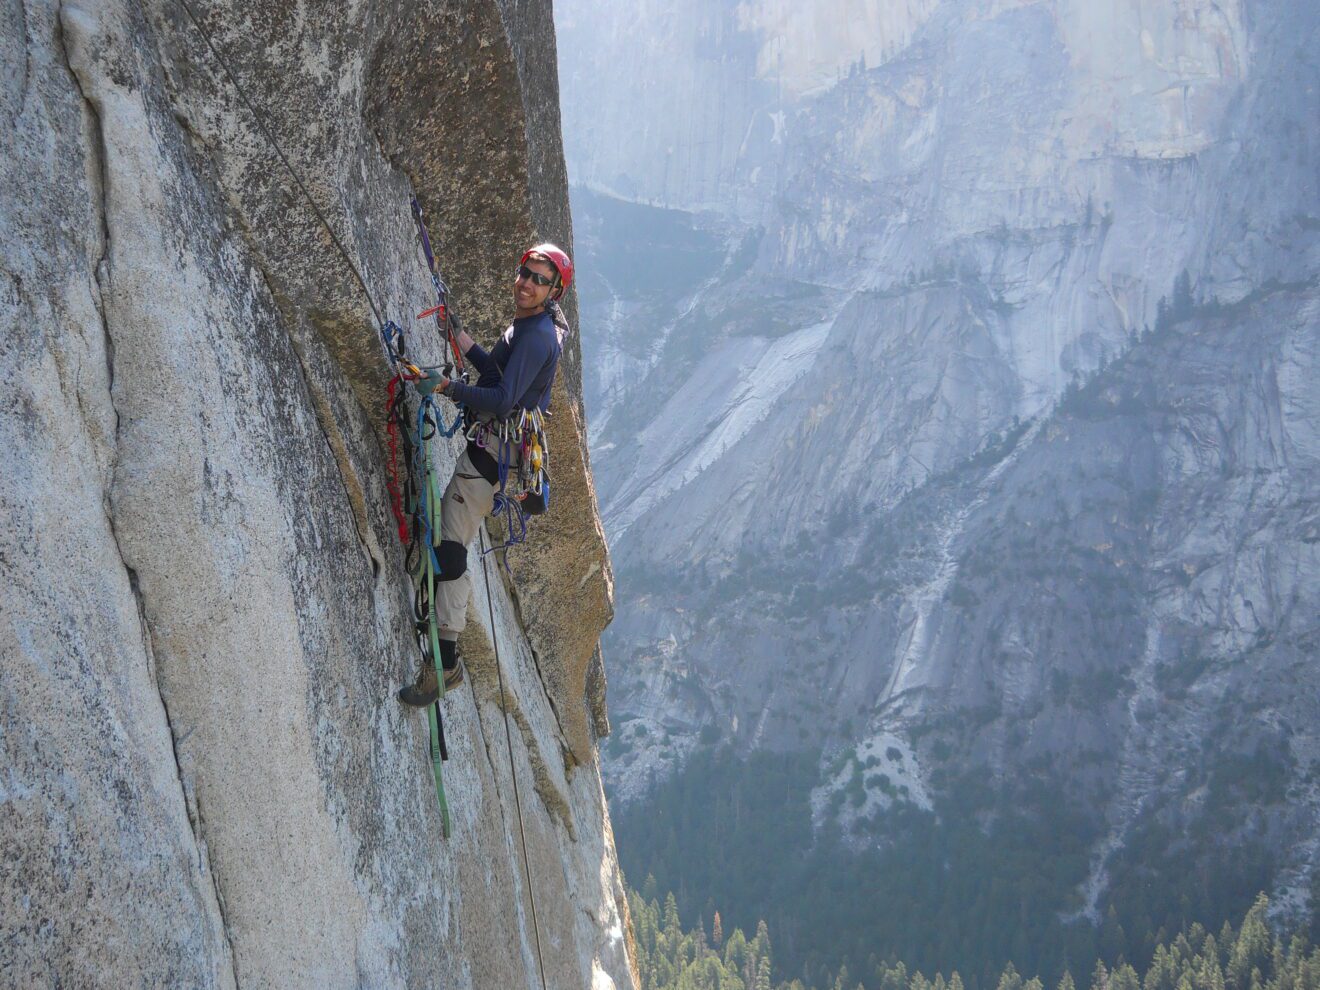 Climbing, falling and learning on Yosemite's “Little Big Wall”